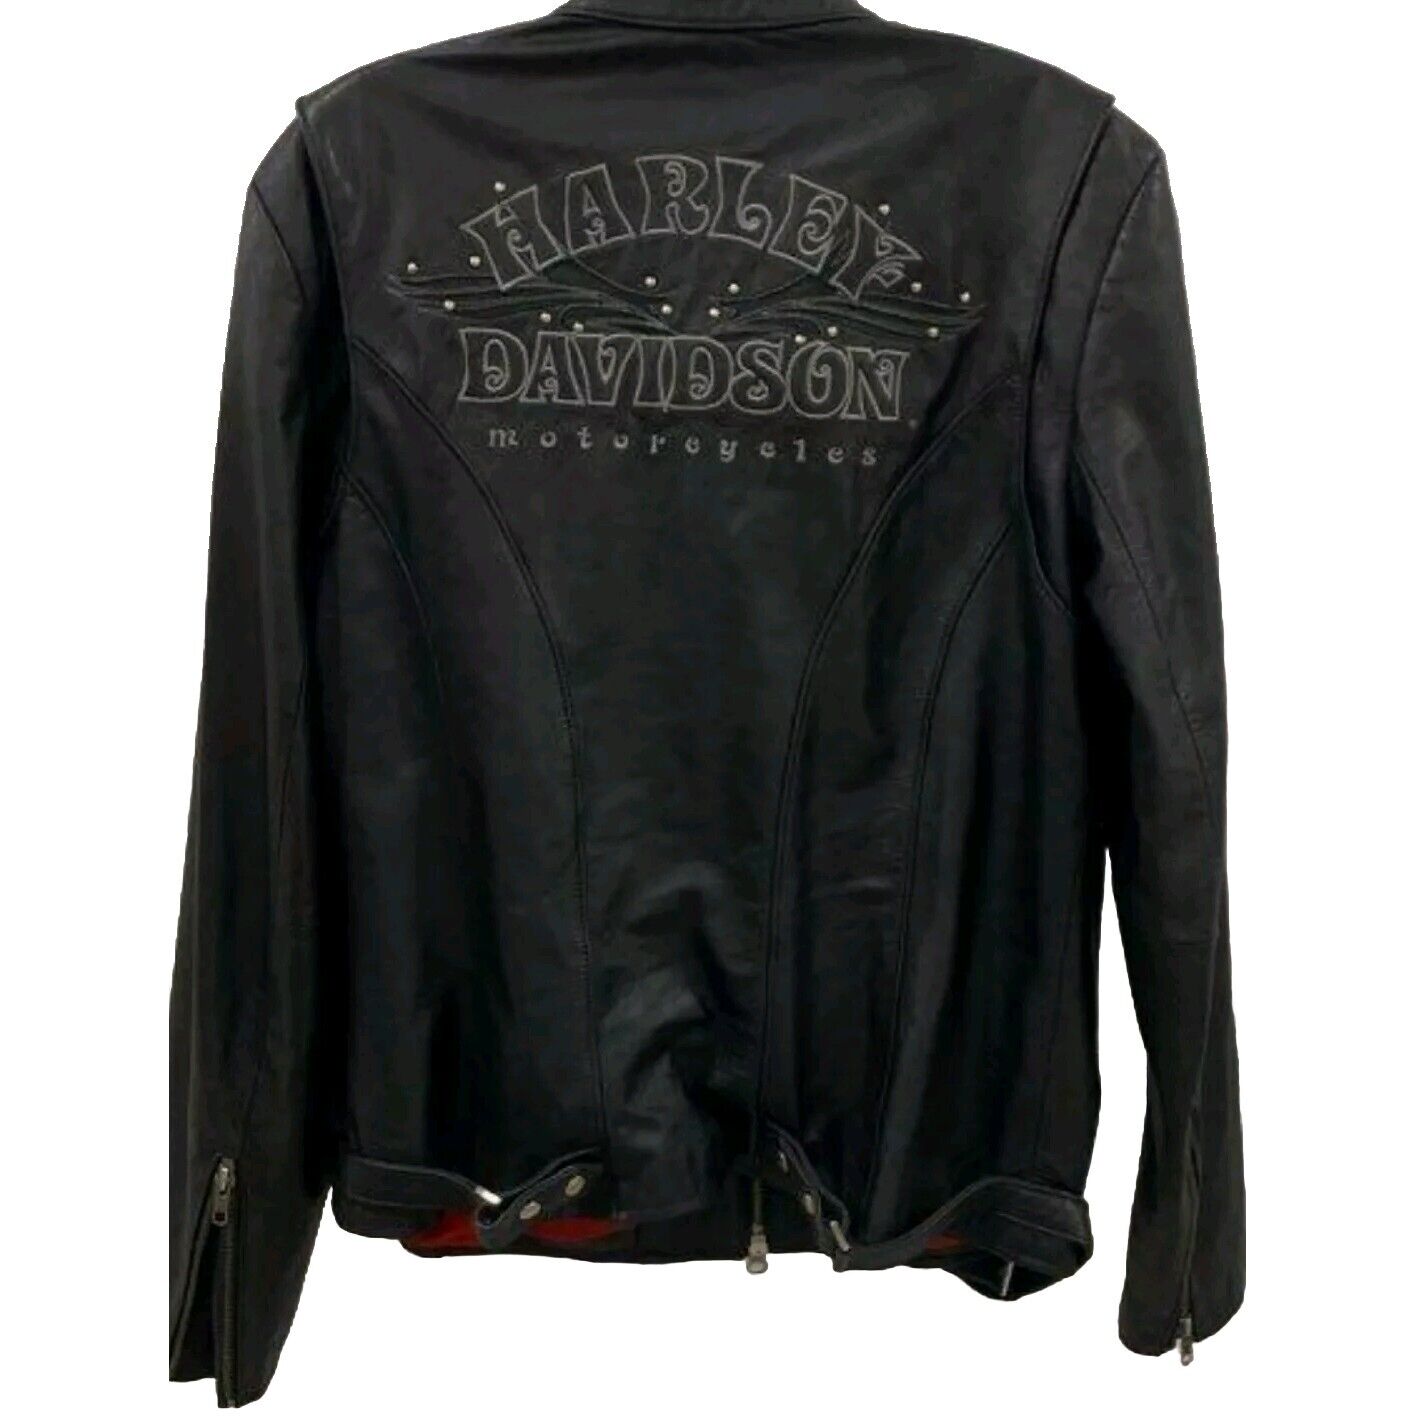 Harley Davidson Jacket Women Black Size XL RN 103819  CA 03402